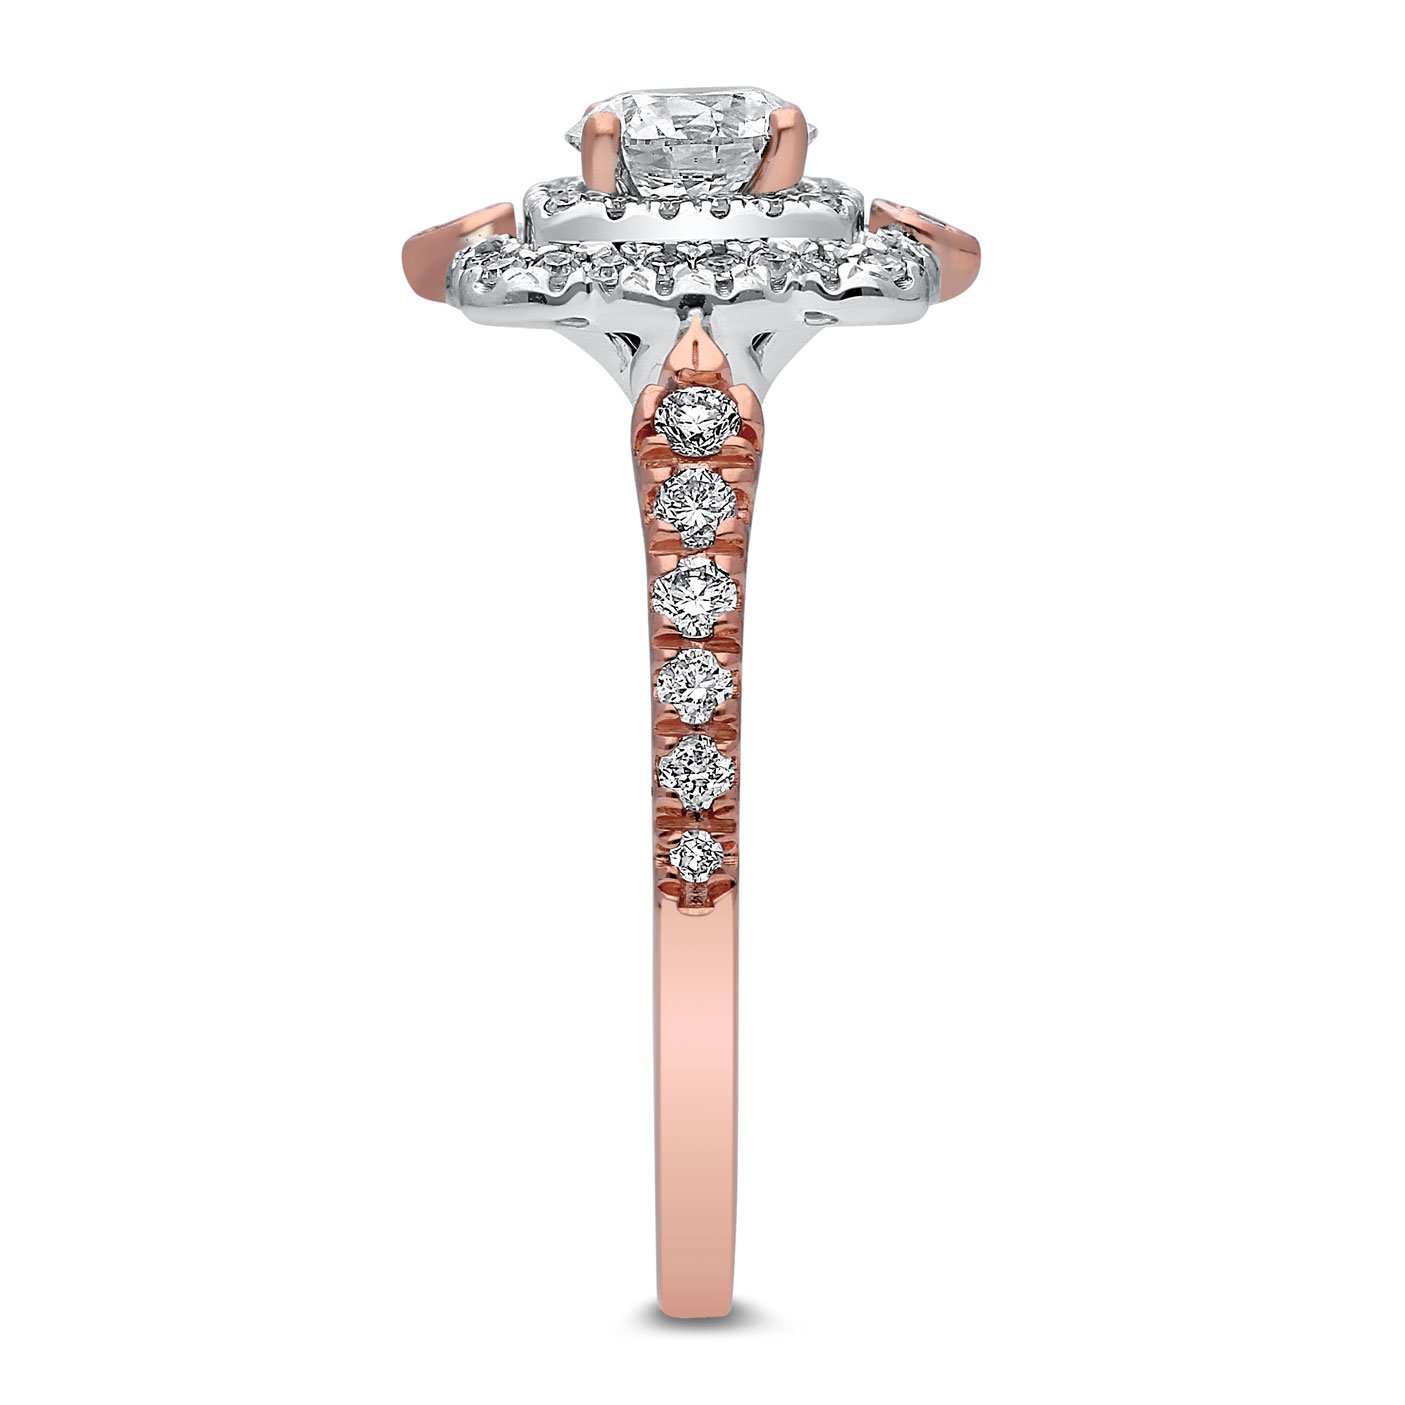 Medina Diamond Ring in Rose Gold - madeinUSAdiamonds